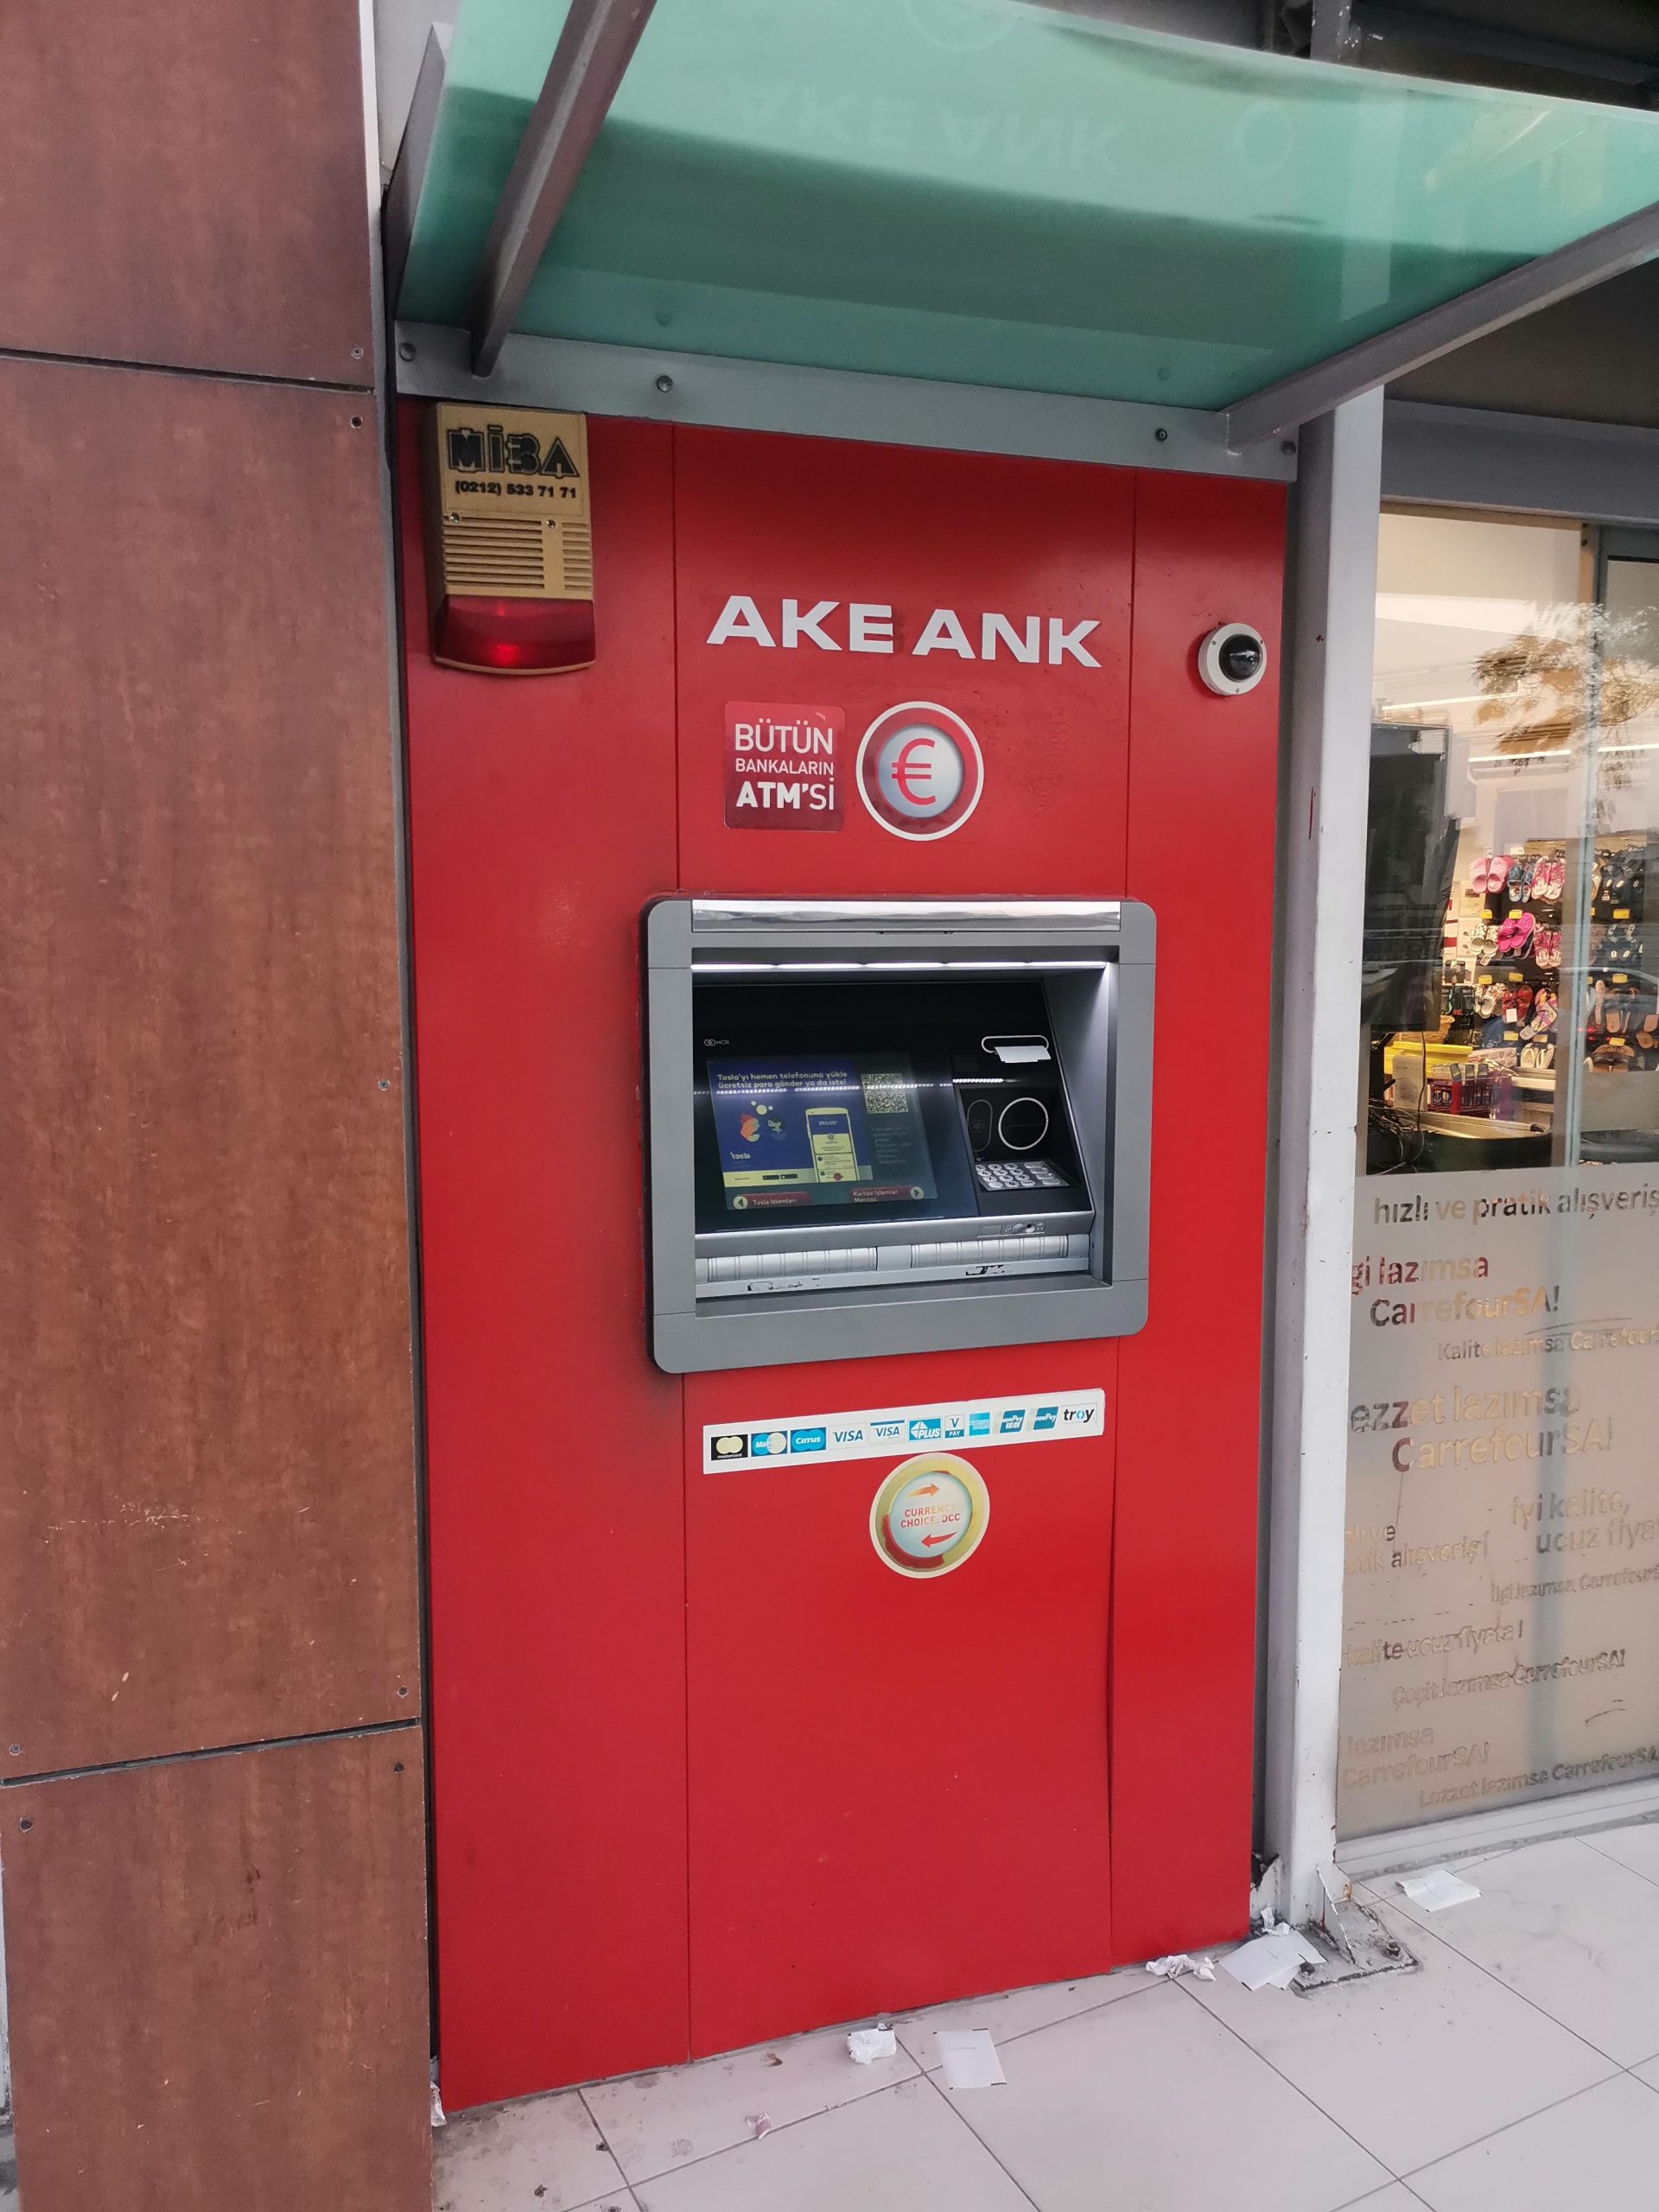 Akbank Банкомат. Турецкие банкоматы. Банкоматы в Турции. Турецкие банкоматы без комиссии. Турция терминал